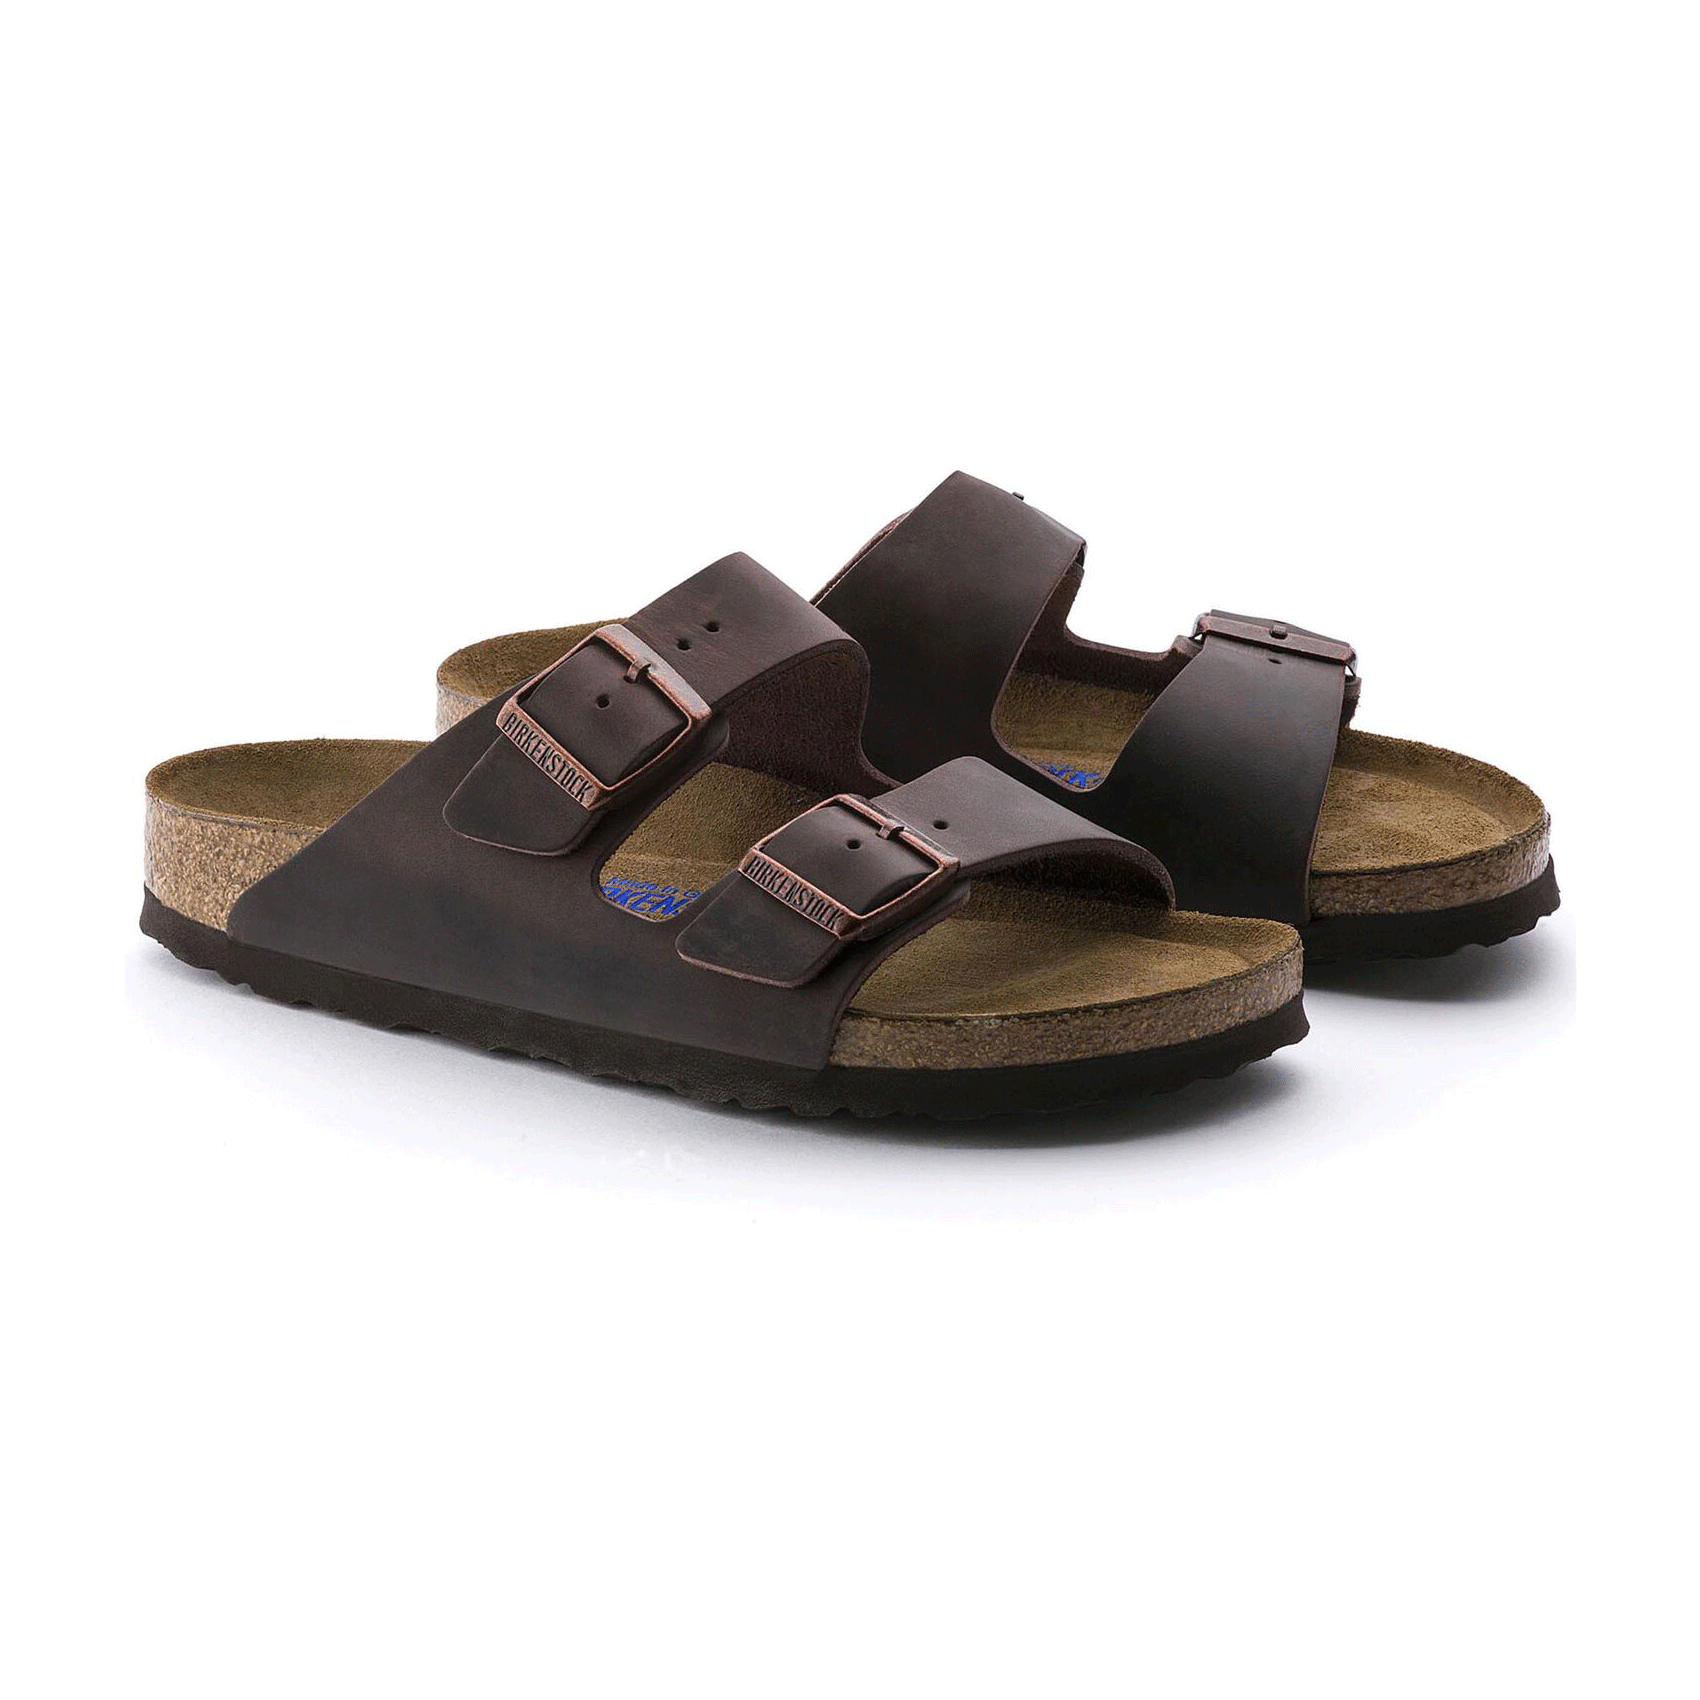 Birkenstock, Arizona Soft Footbed Habana - Sandalo in pelle oliata marrone scuro - Regolare/Largo